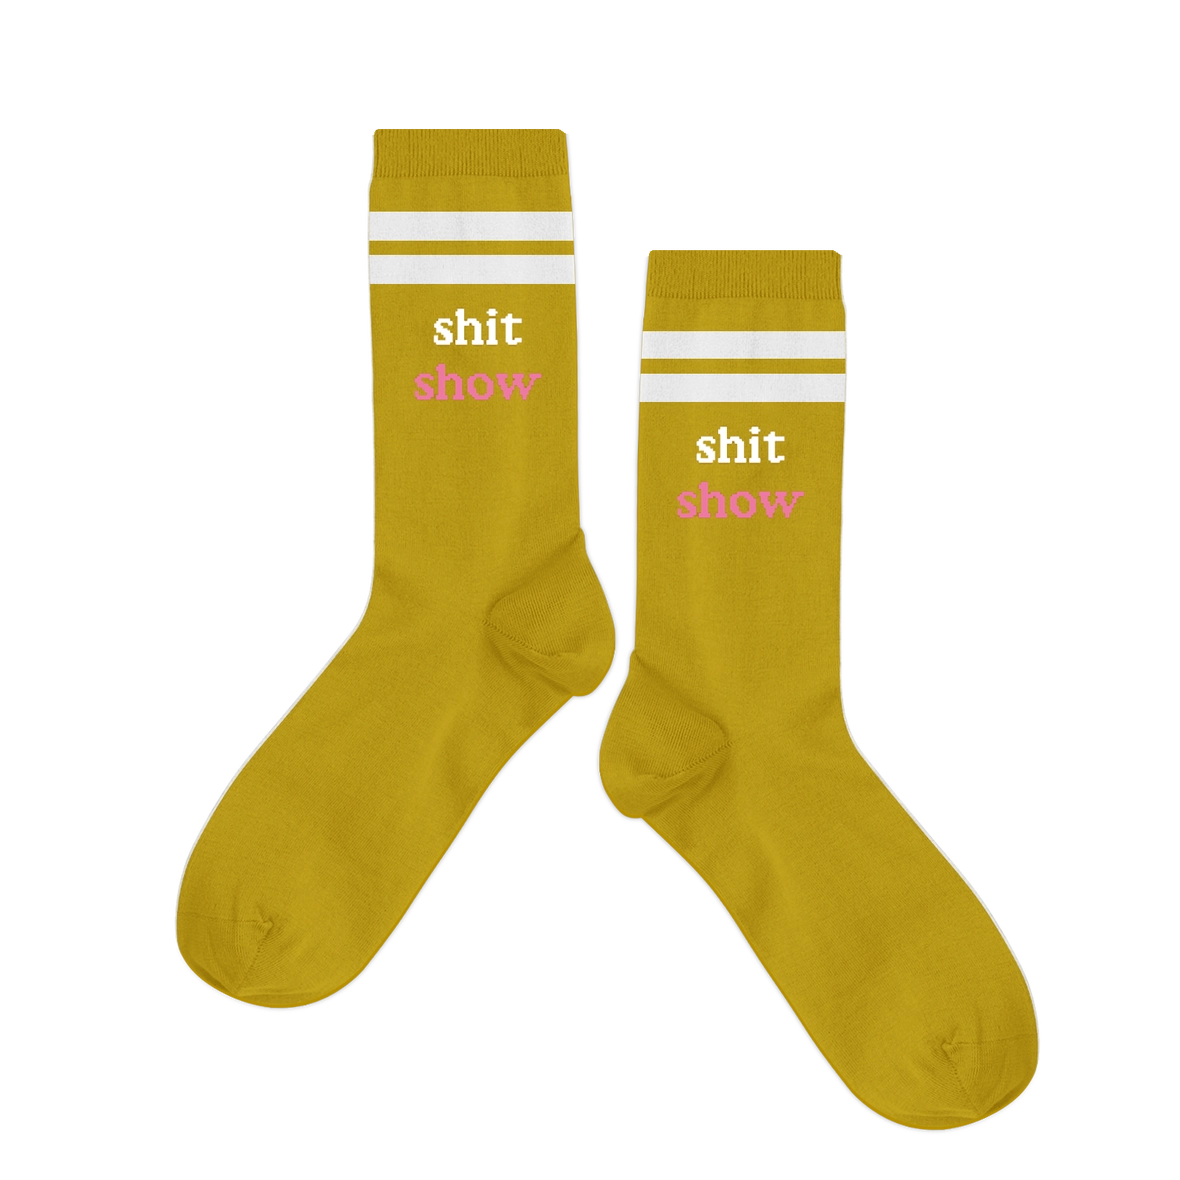 sh*t show socks